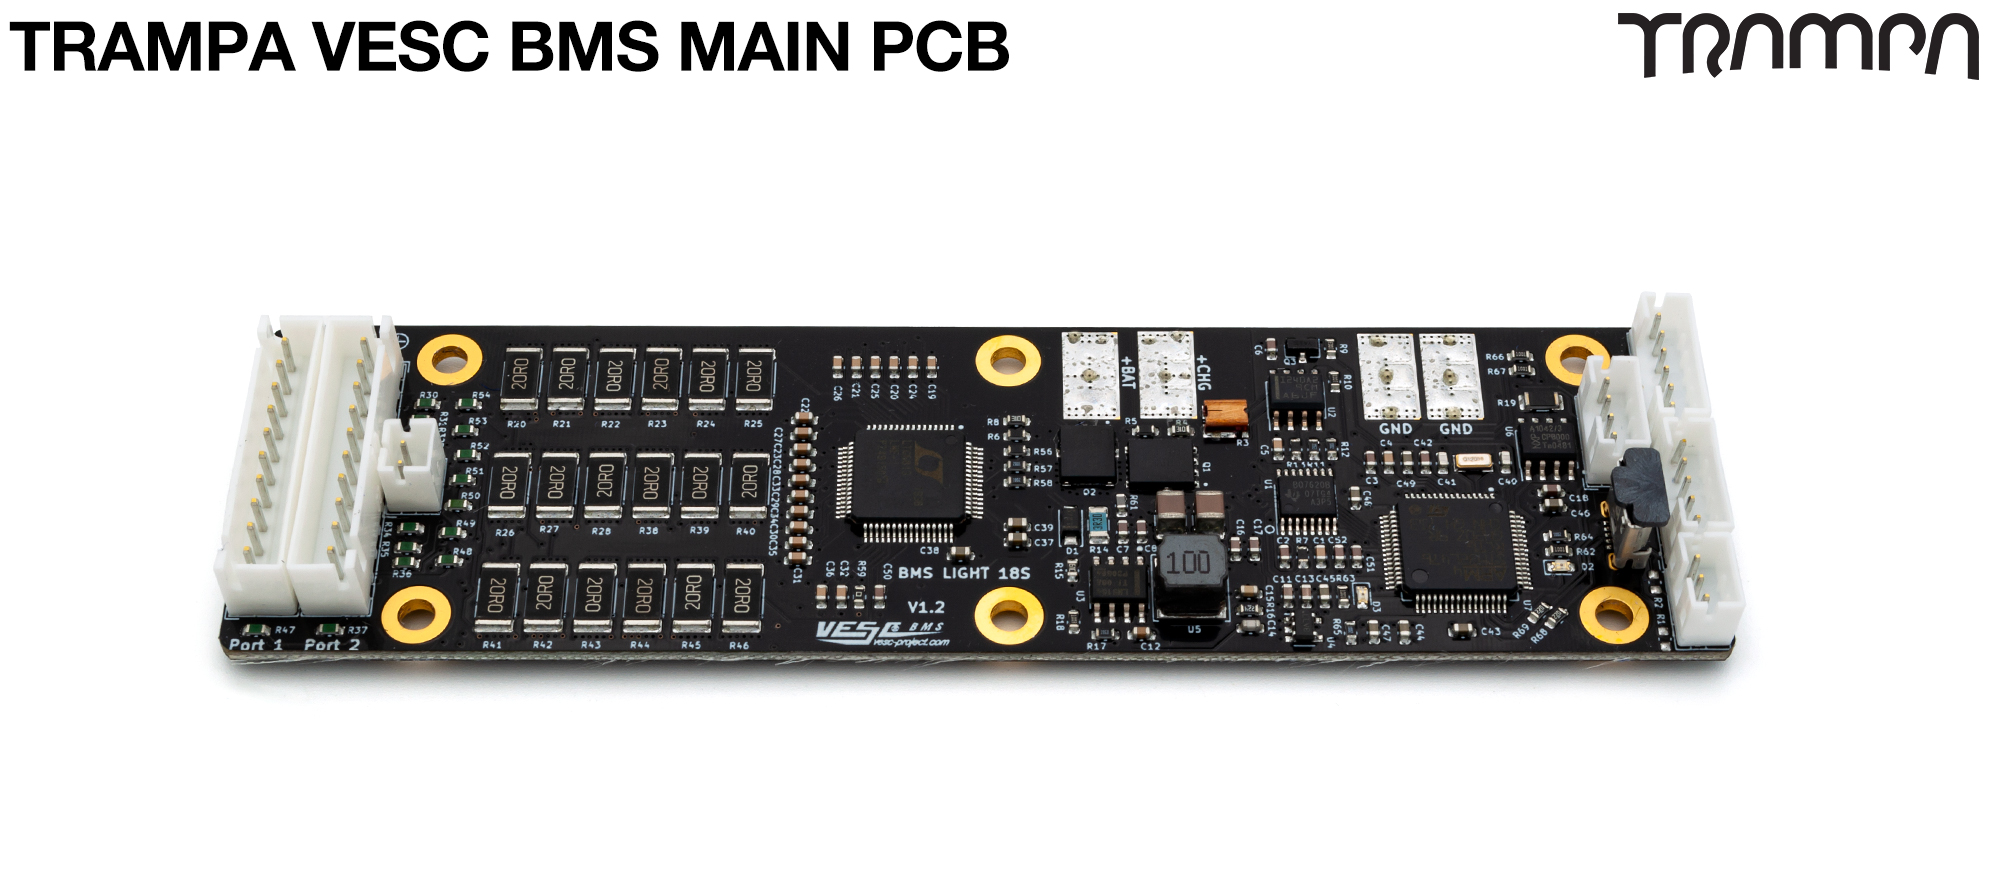 TRAMPA VESC BMS (Battery Management System) MAIN PCB x500